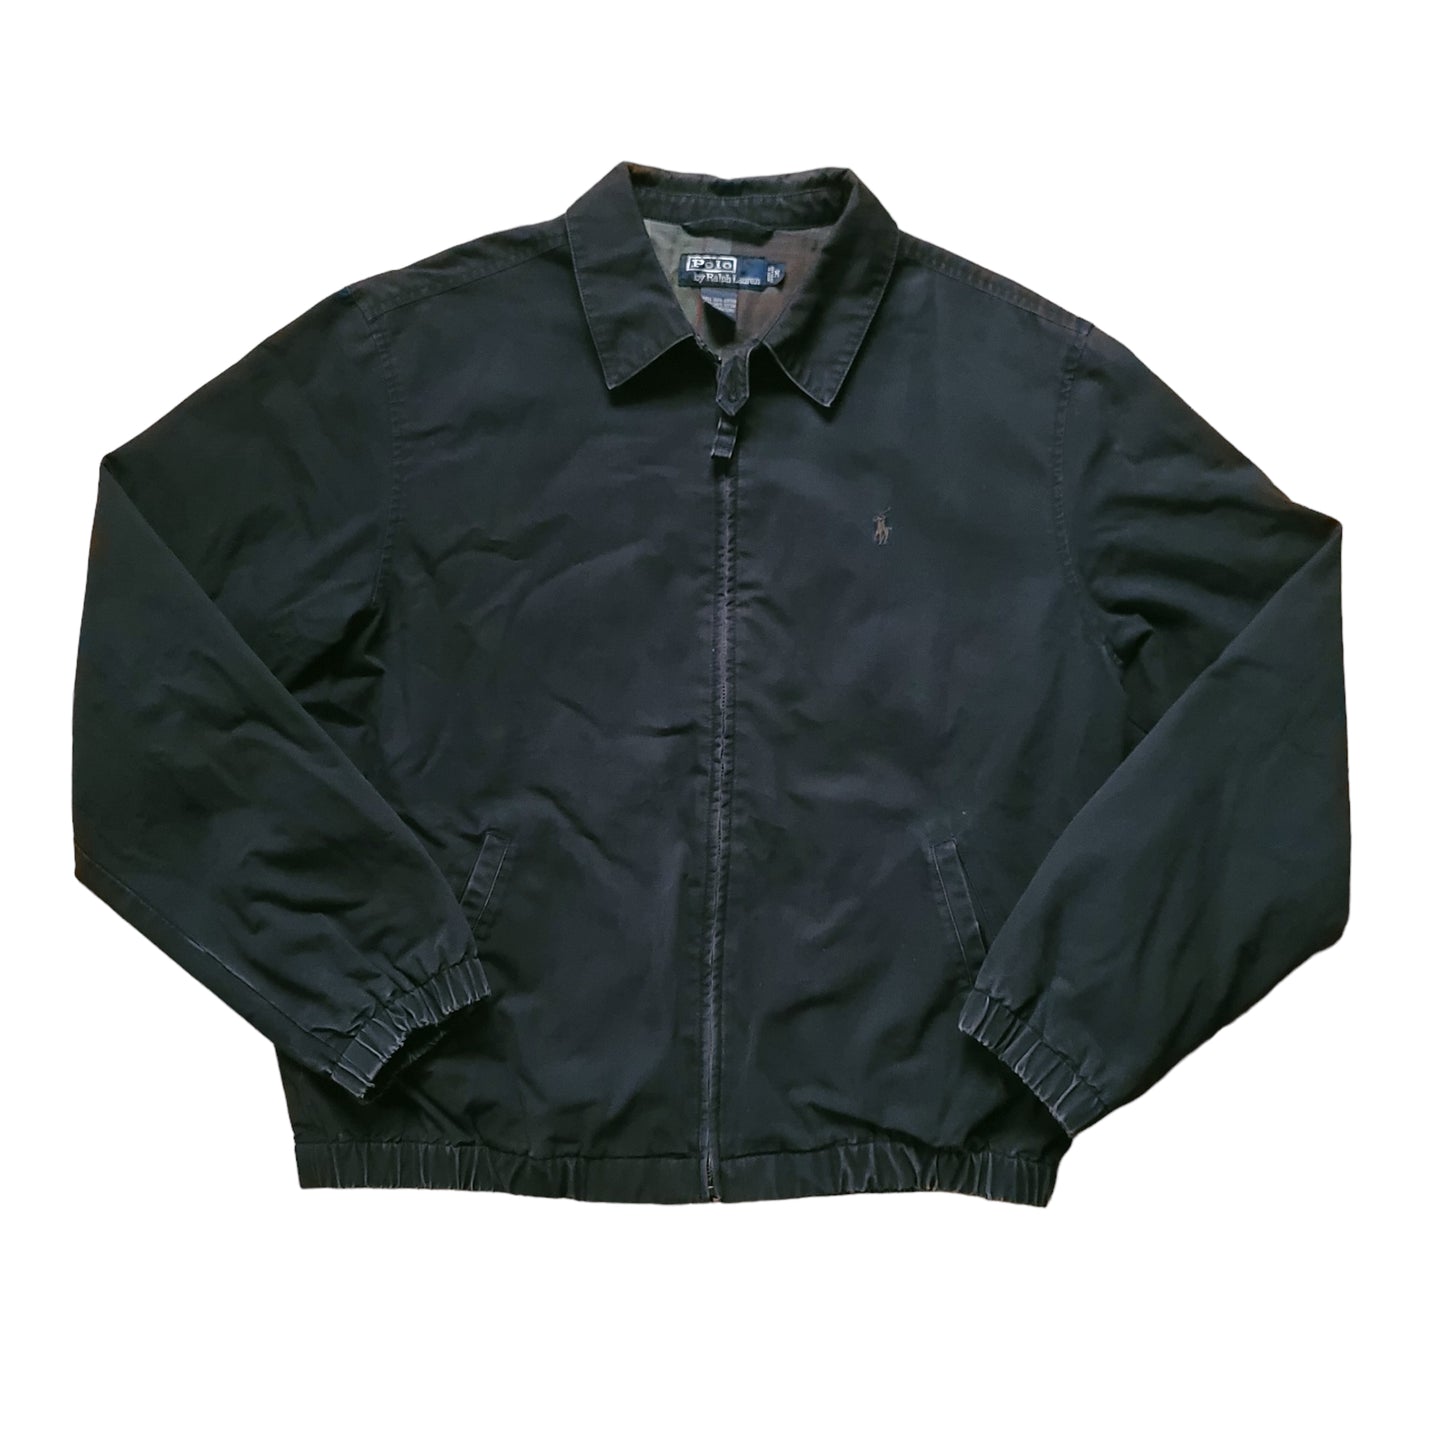 Polo Ralph Lauren Black Harrington Jacket